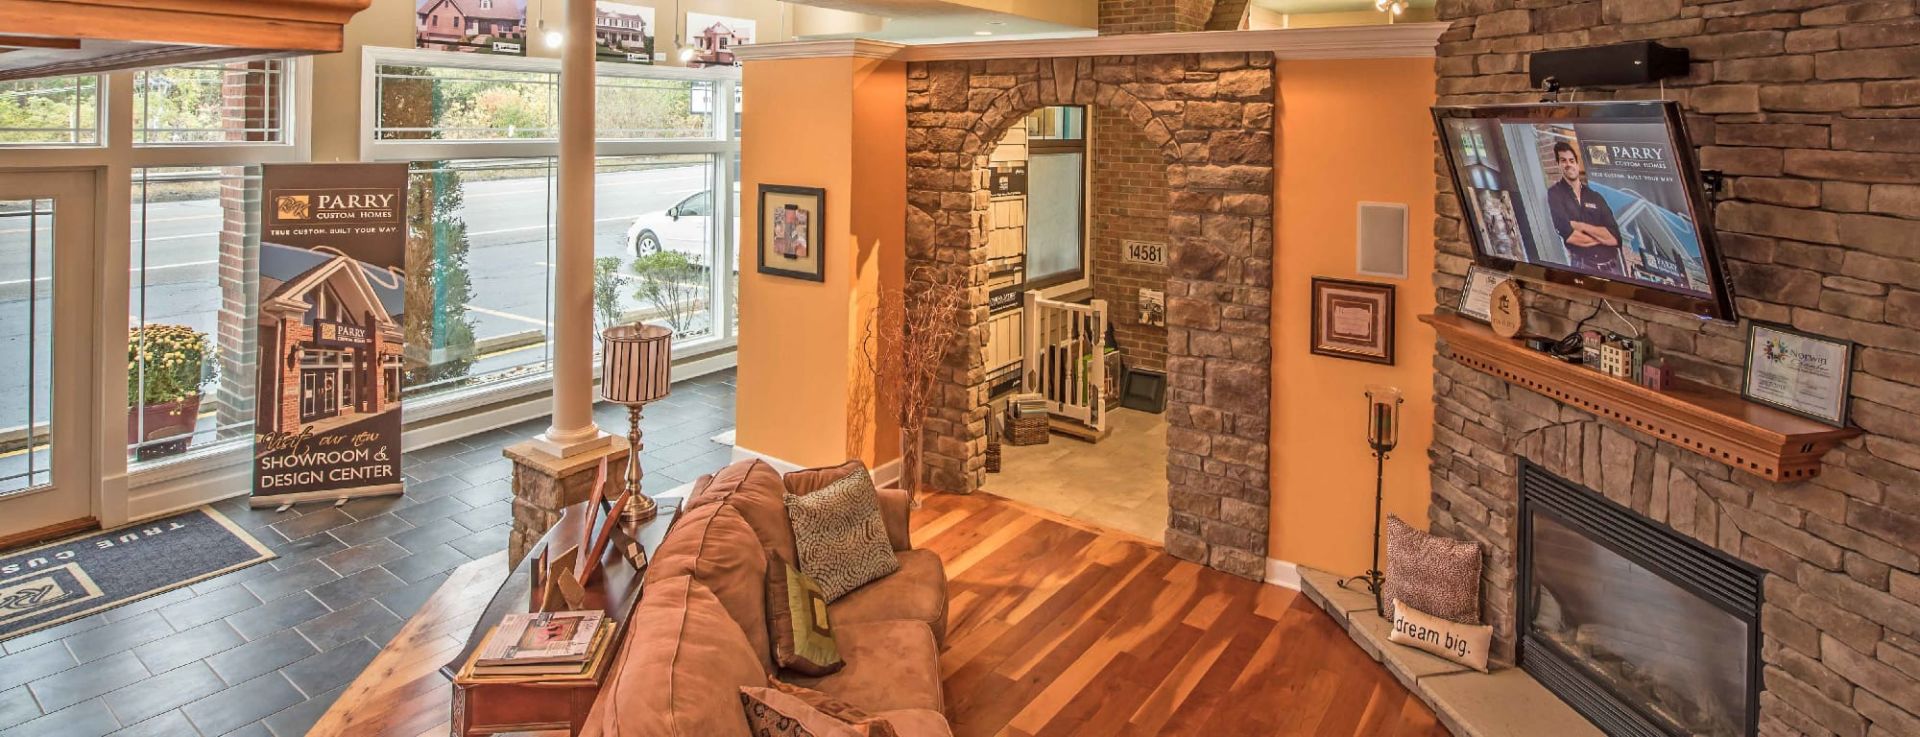 custom living room orange walls and wood floor